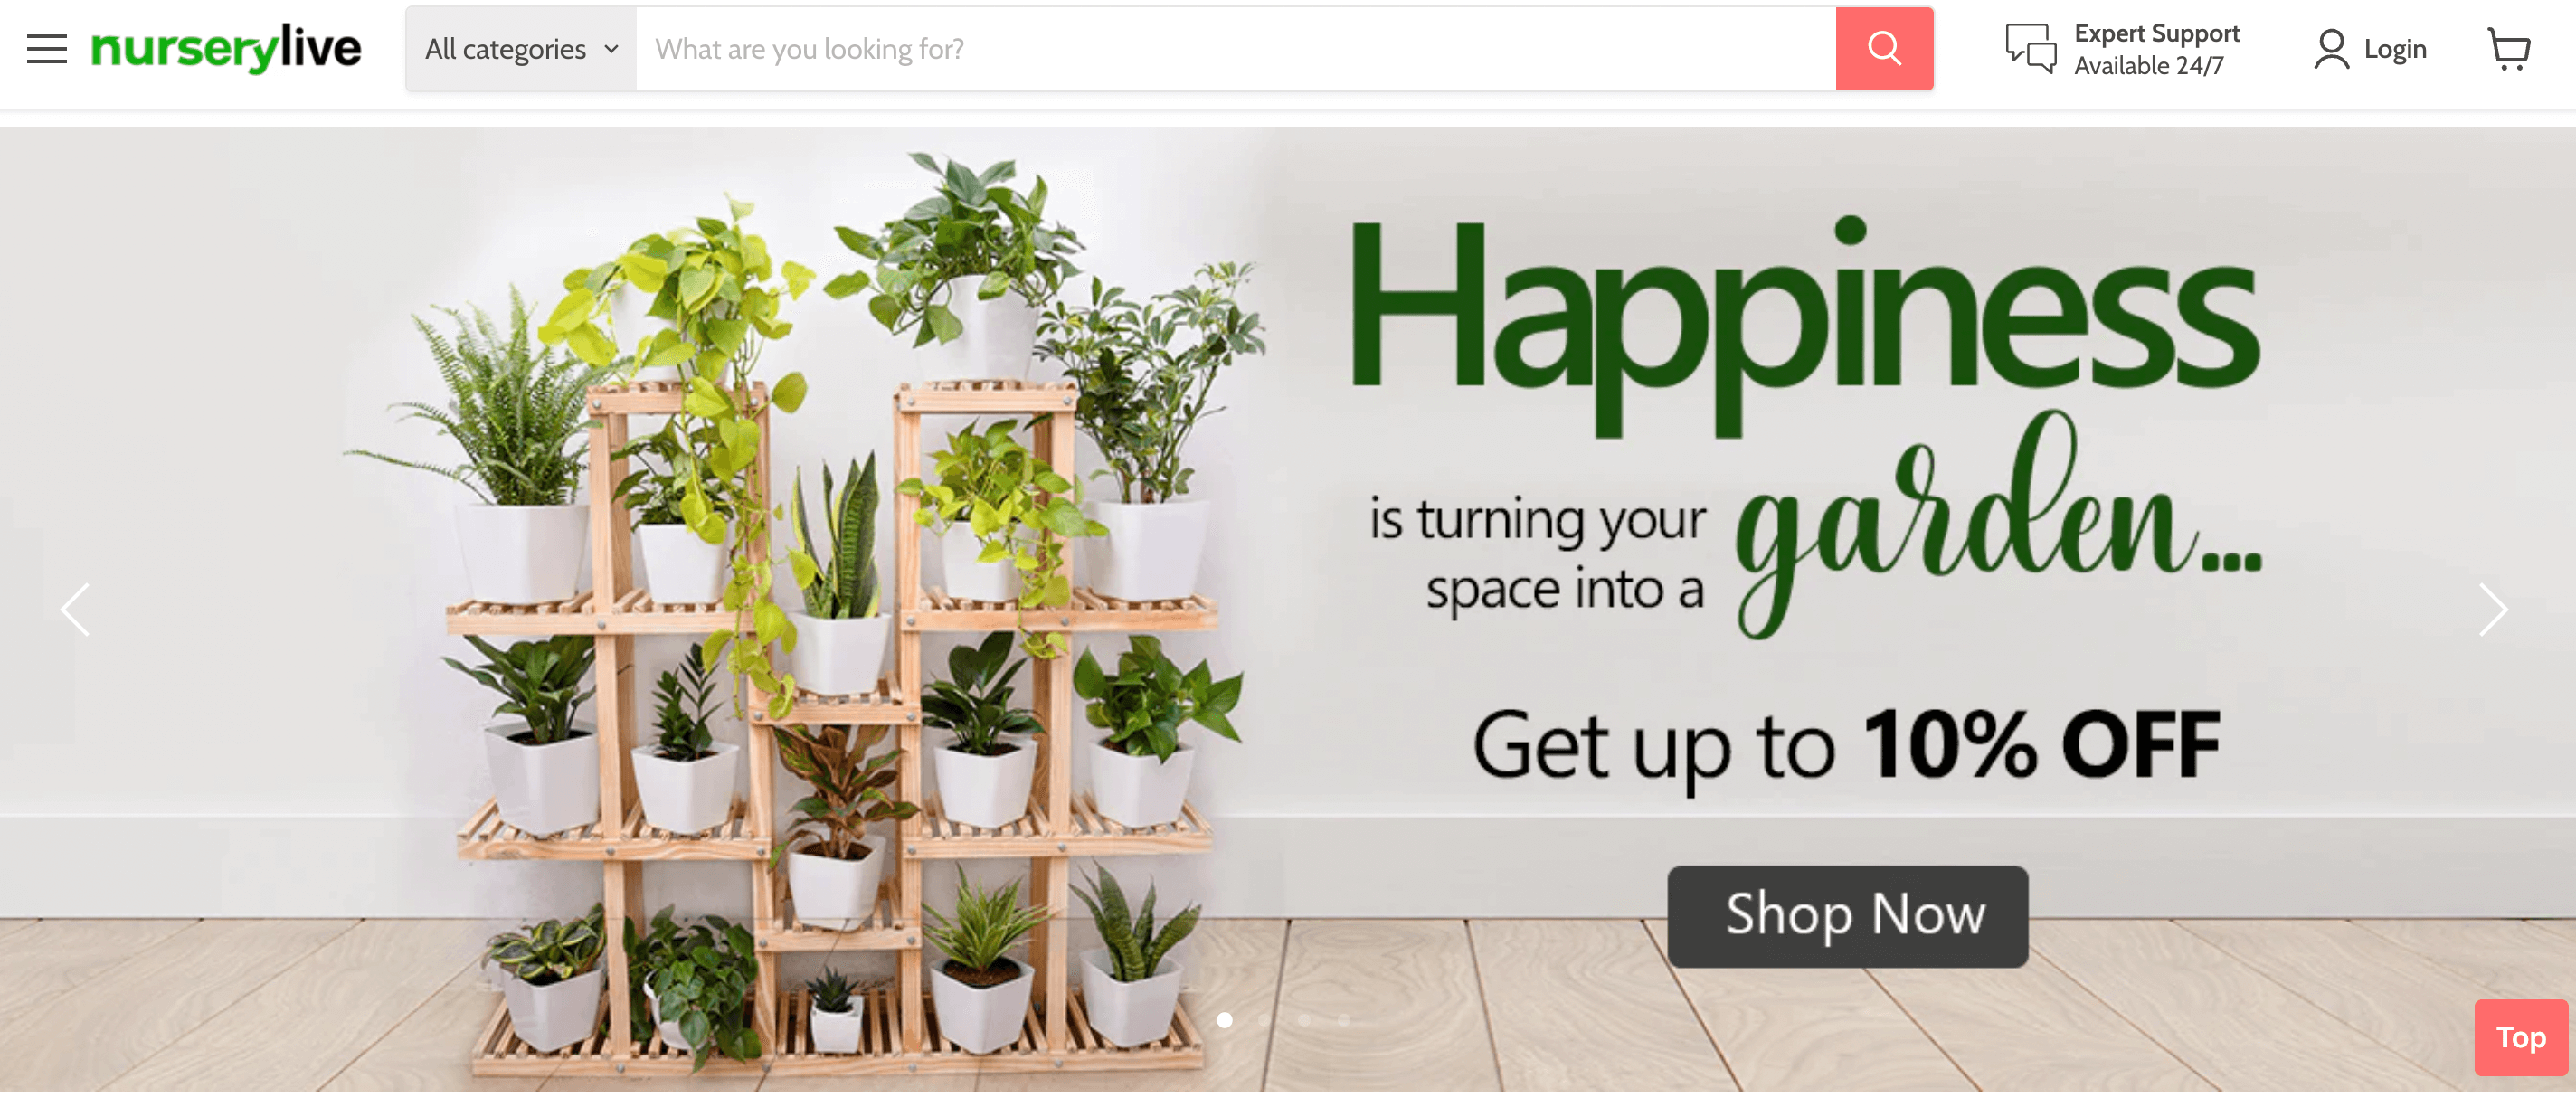 home and garden loyalty program examples - nurserylive homepage screenshot